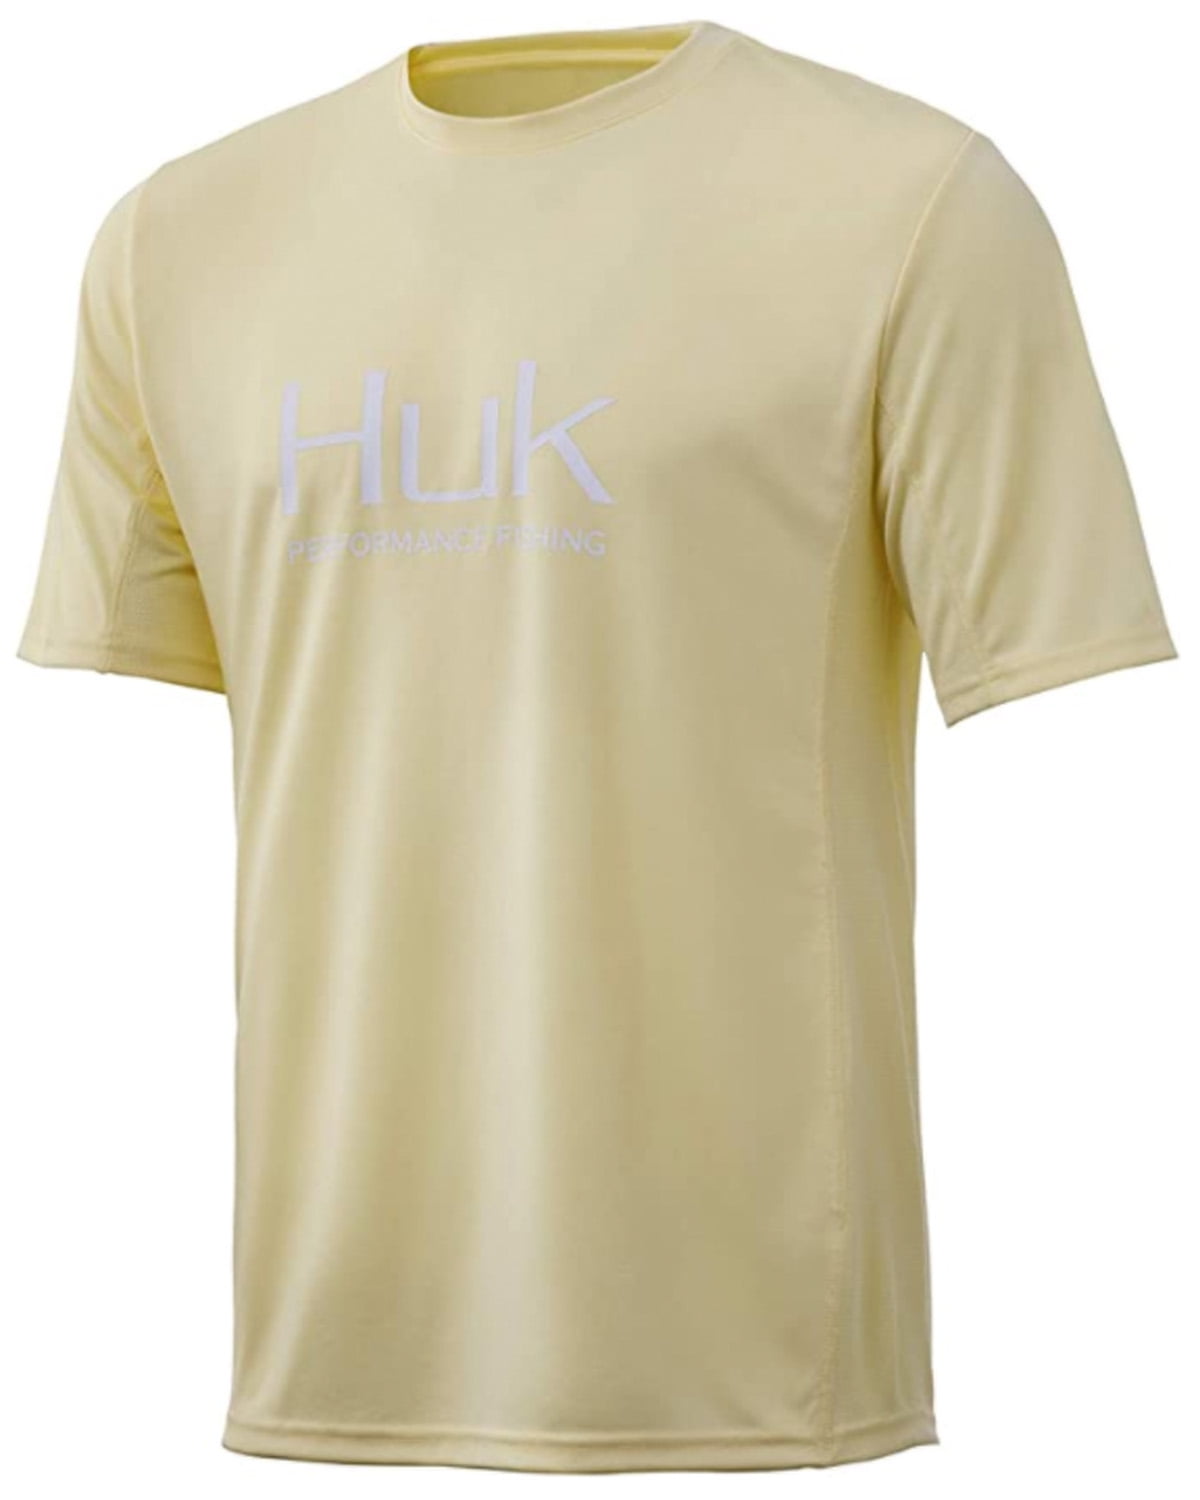 HUK Icon X Short Sleeve ShirtFishing Shirt with Sun Protection